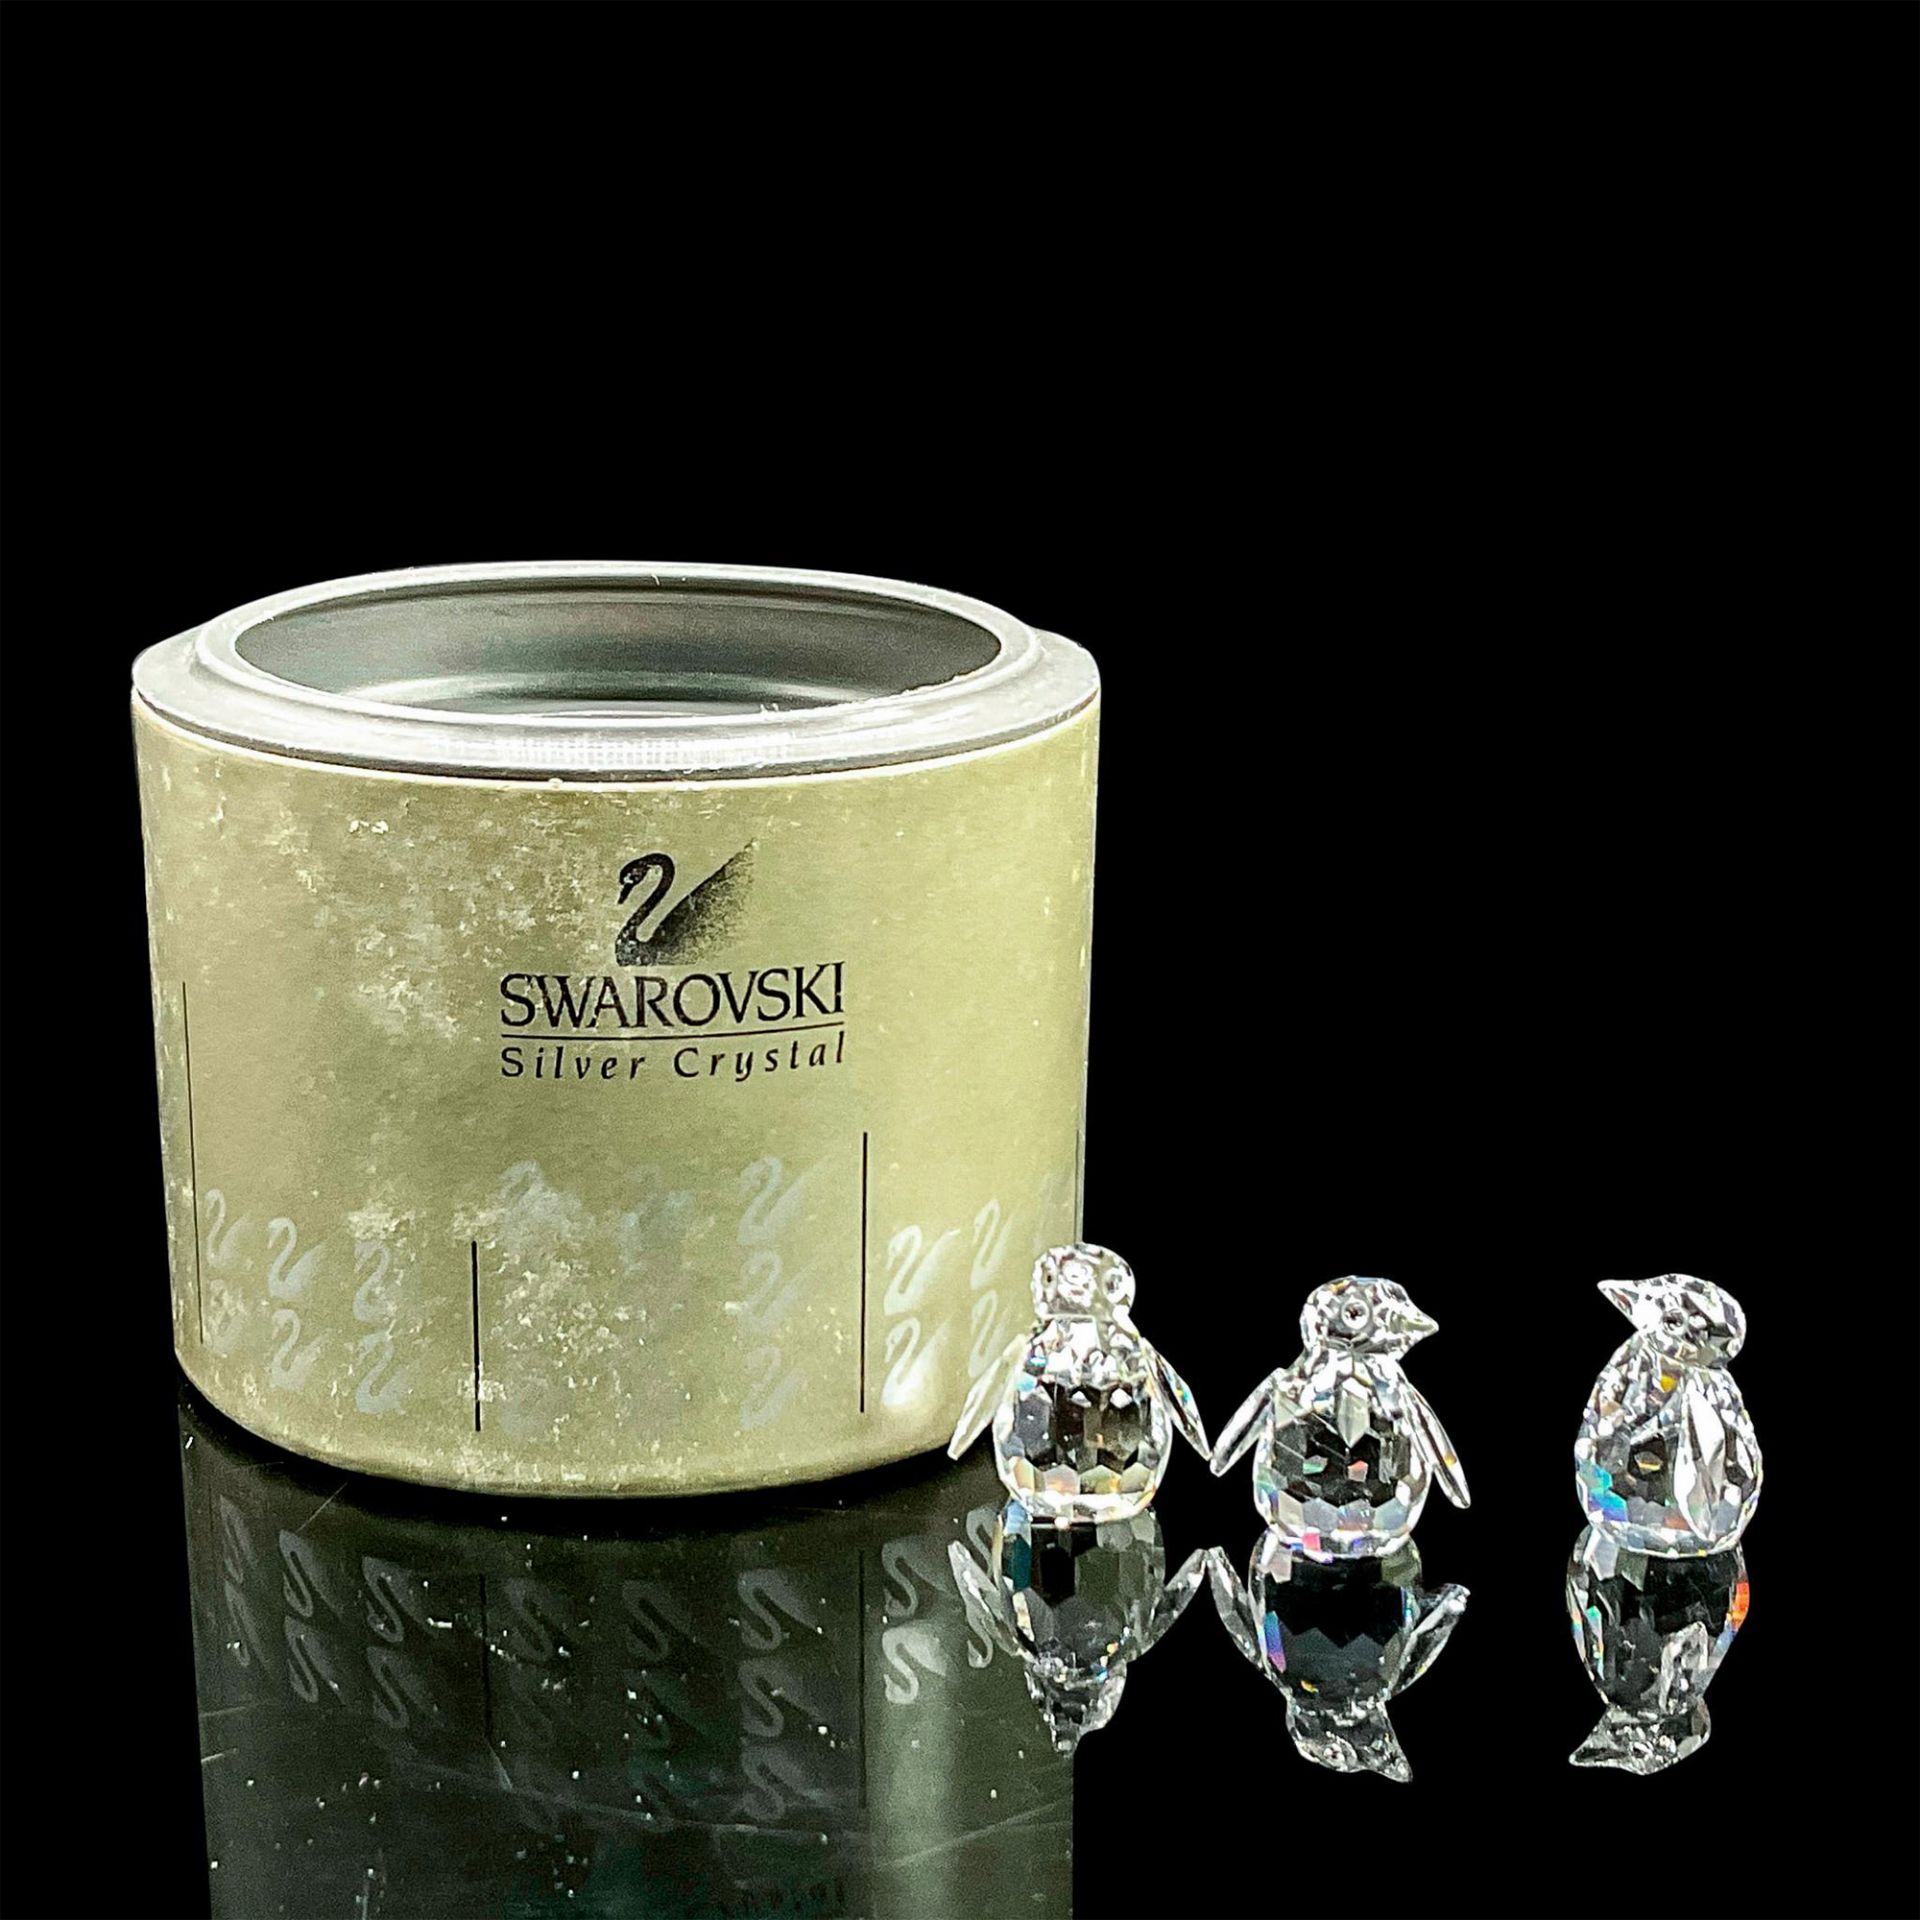 Swarovski Silver Crystal Figurines, Baby Penguins - Image 4 of 4